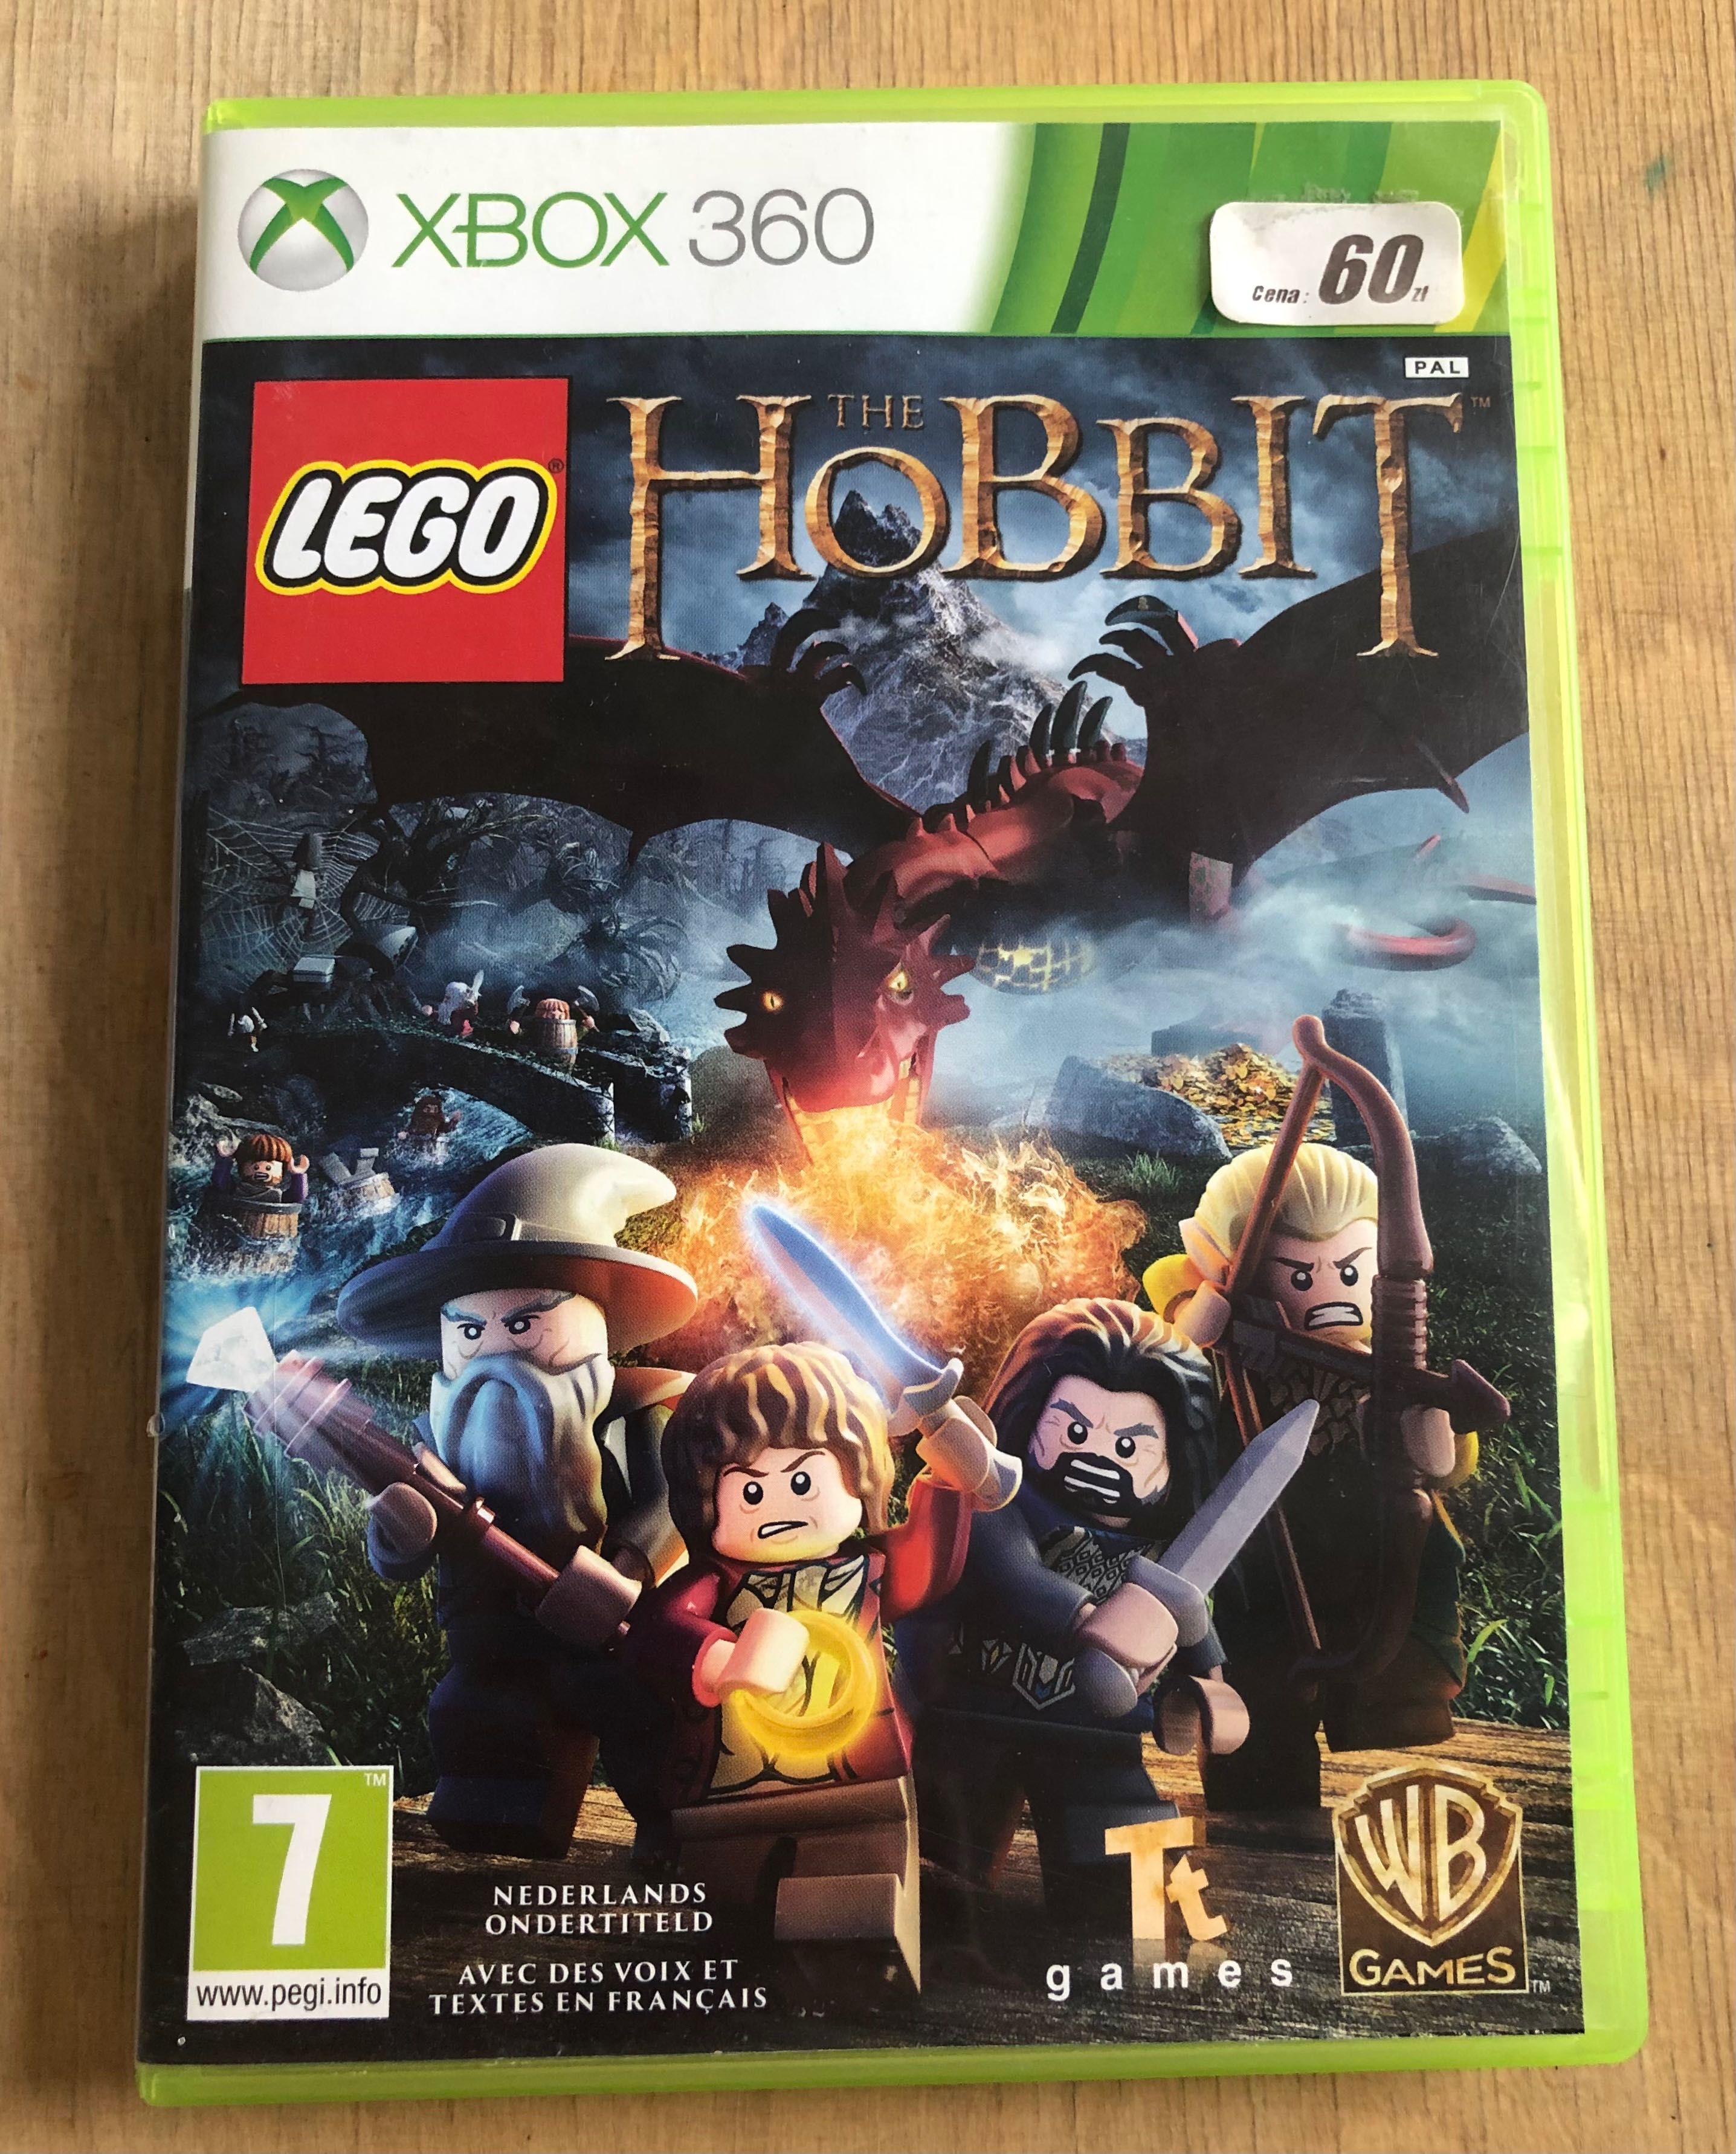 Gry Xbox 360 naruto, Hobbit